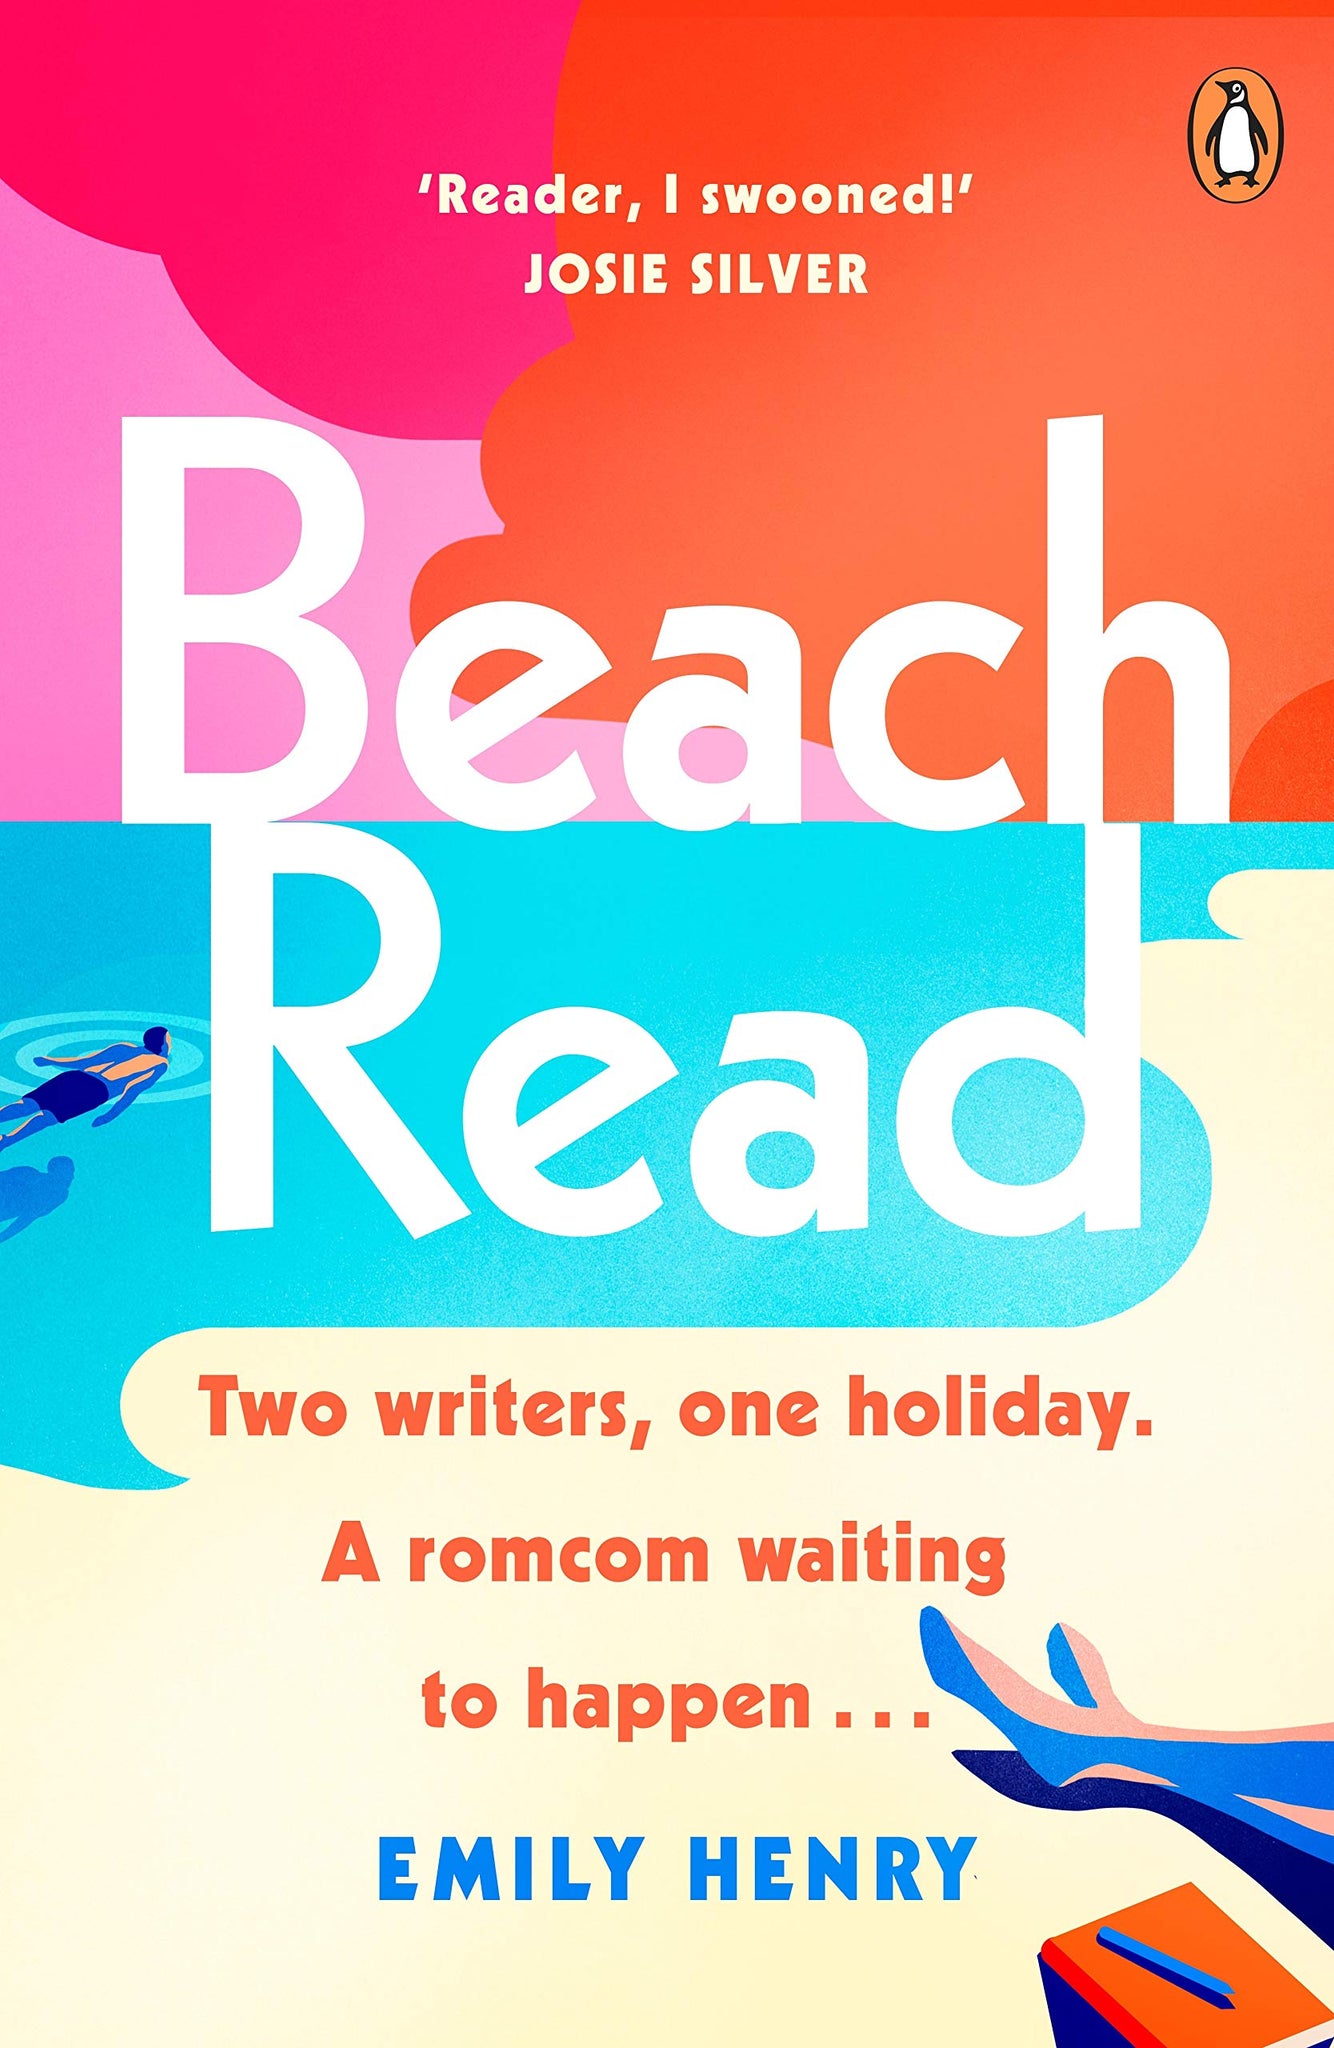 Beach Read - Paperback